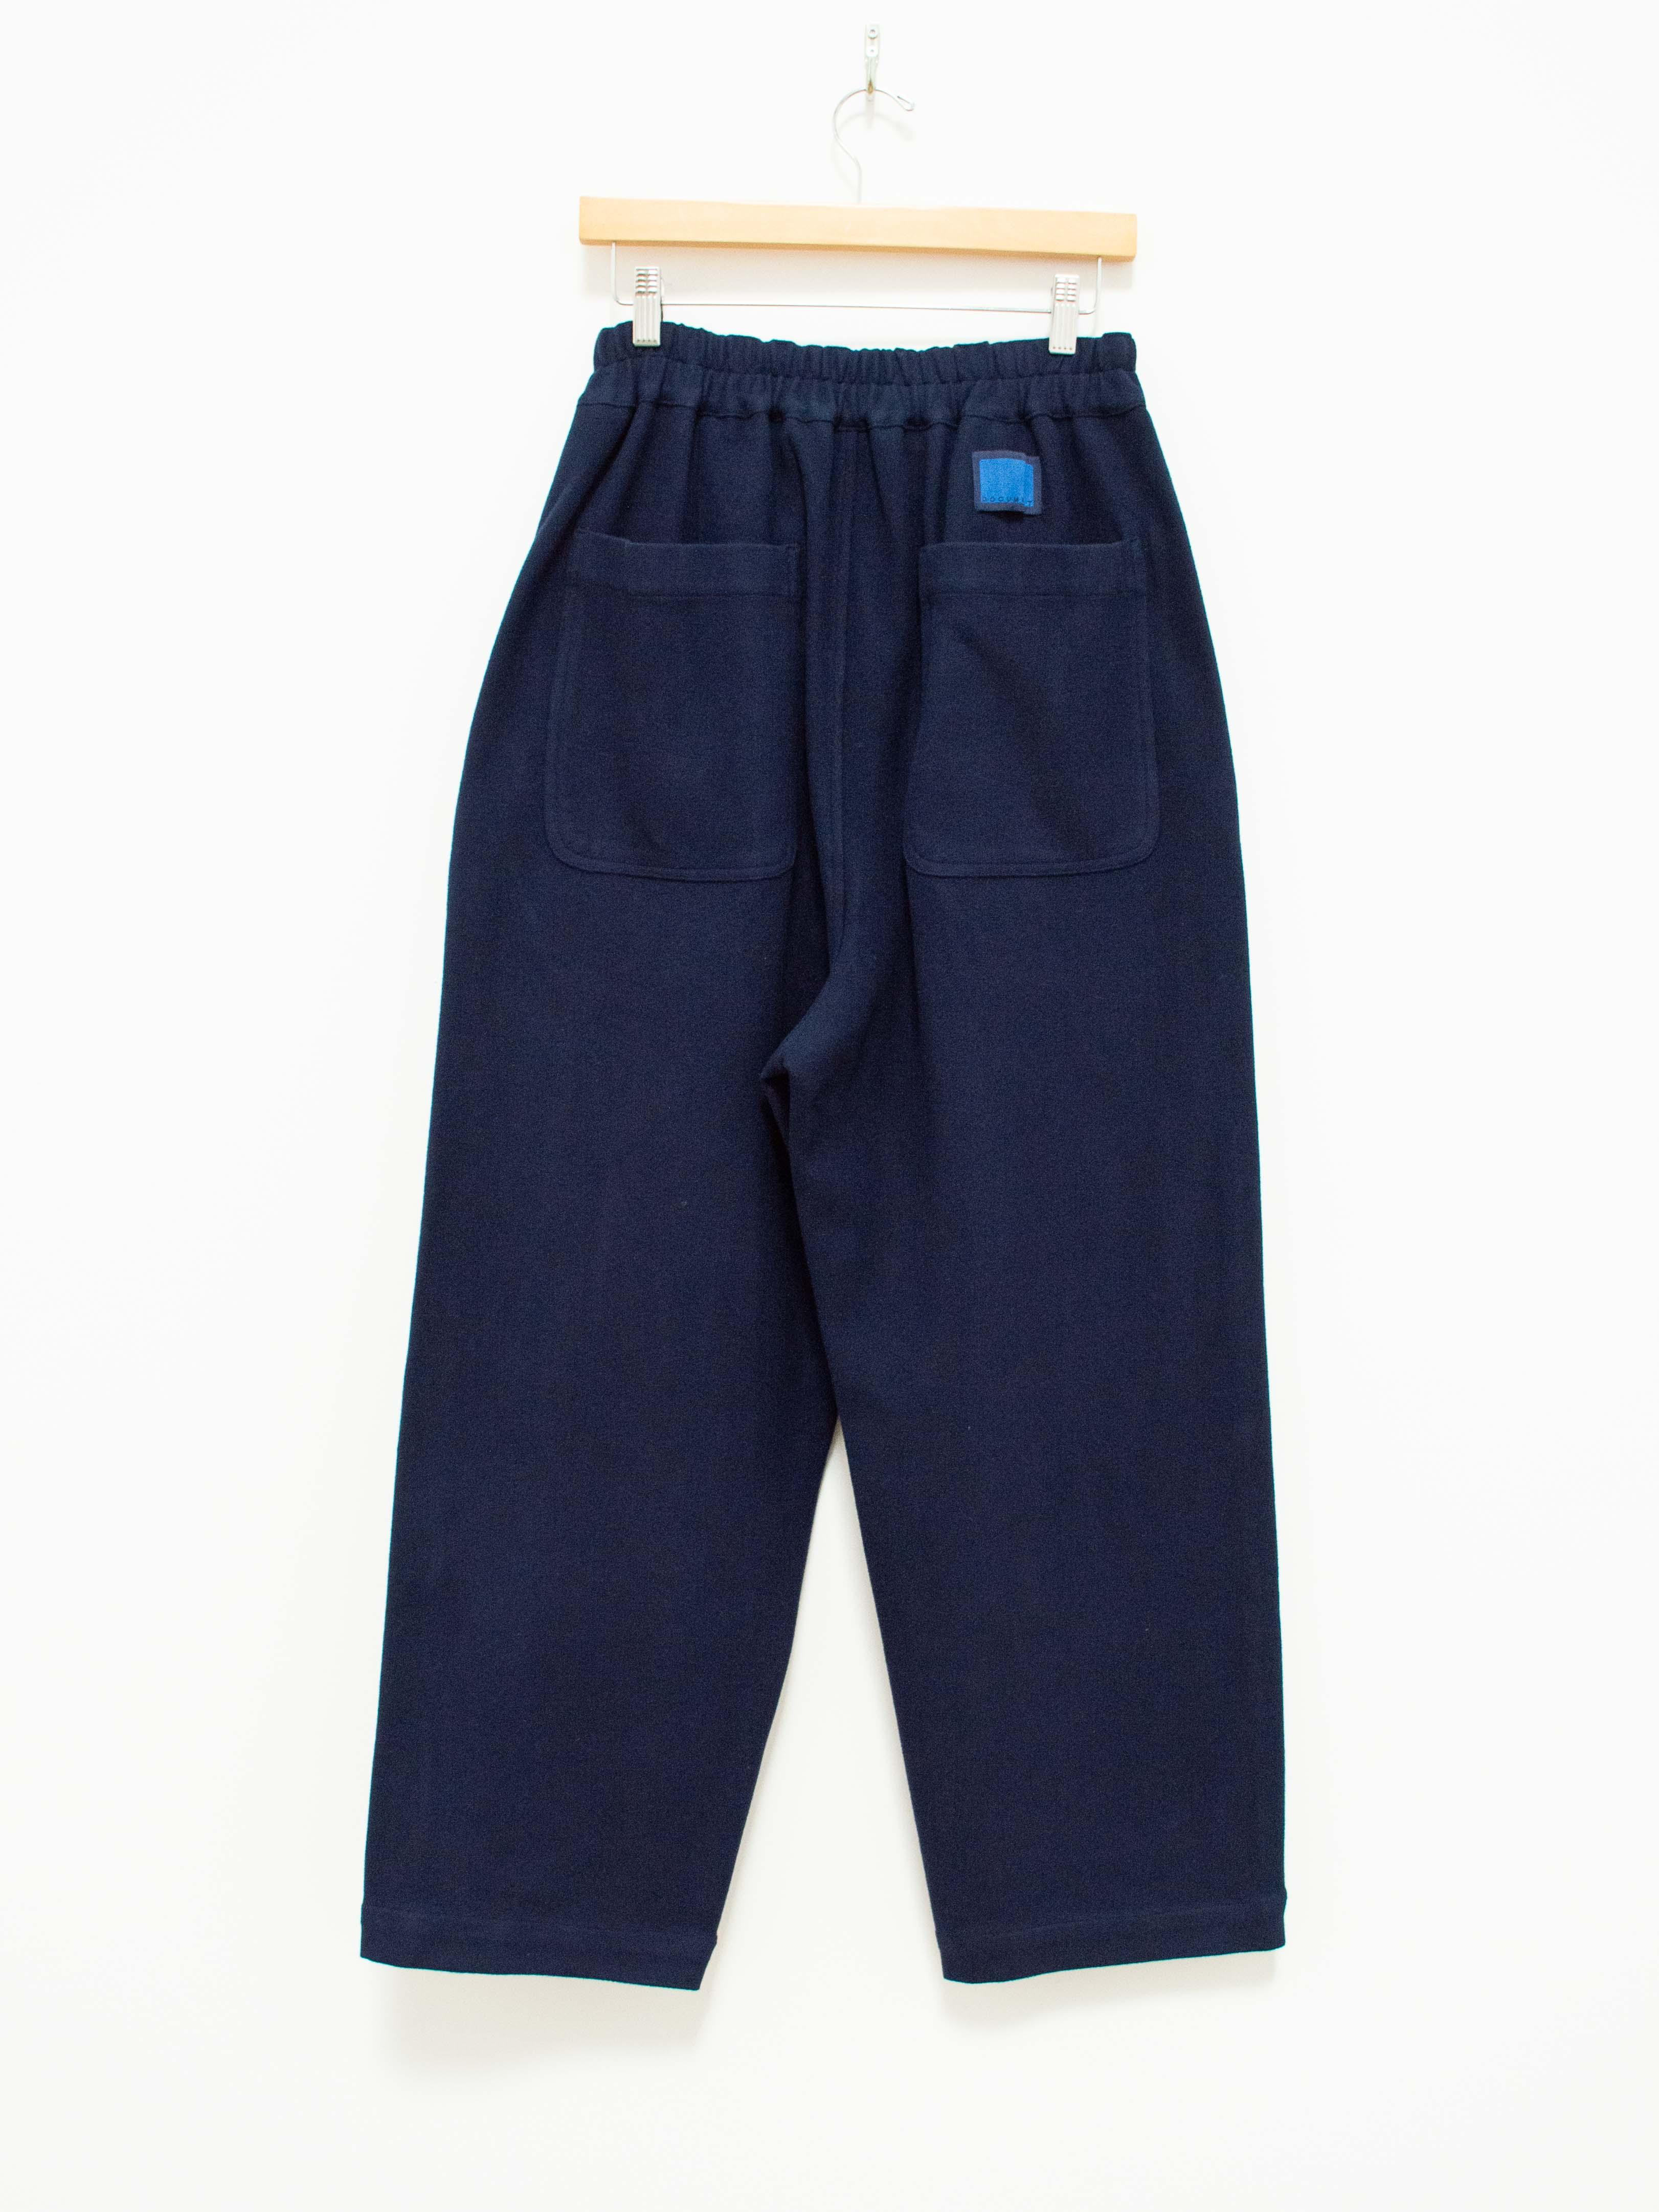 Namu Shop - Document Jersey Tucked Painter Pants - Blue Navy